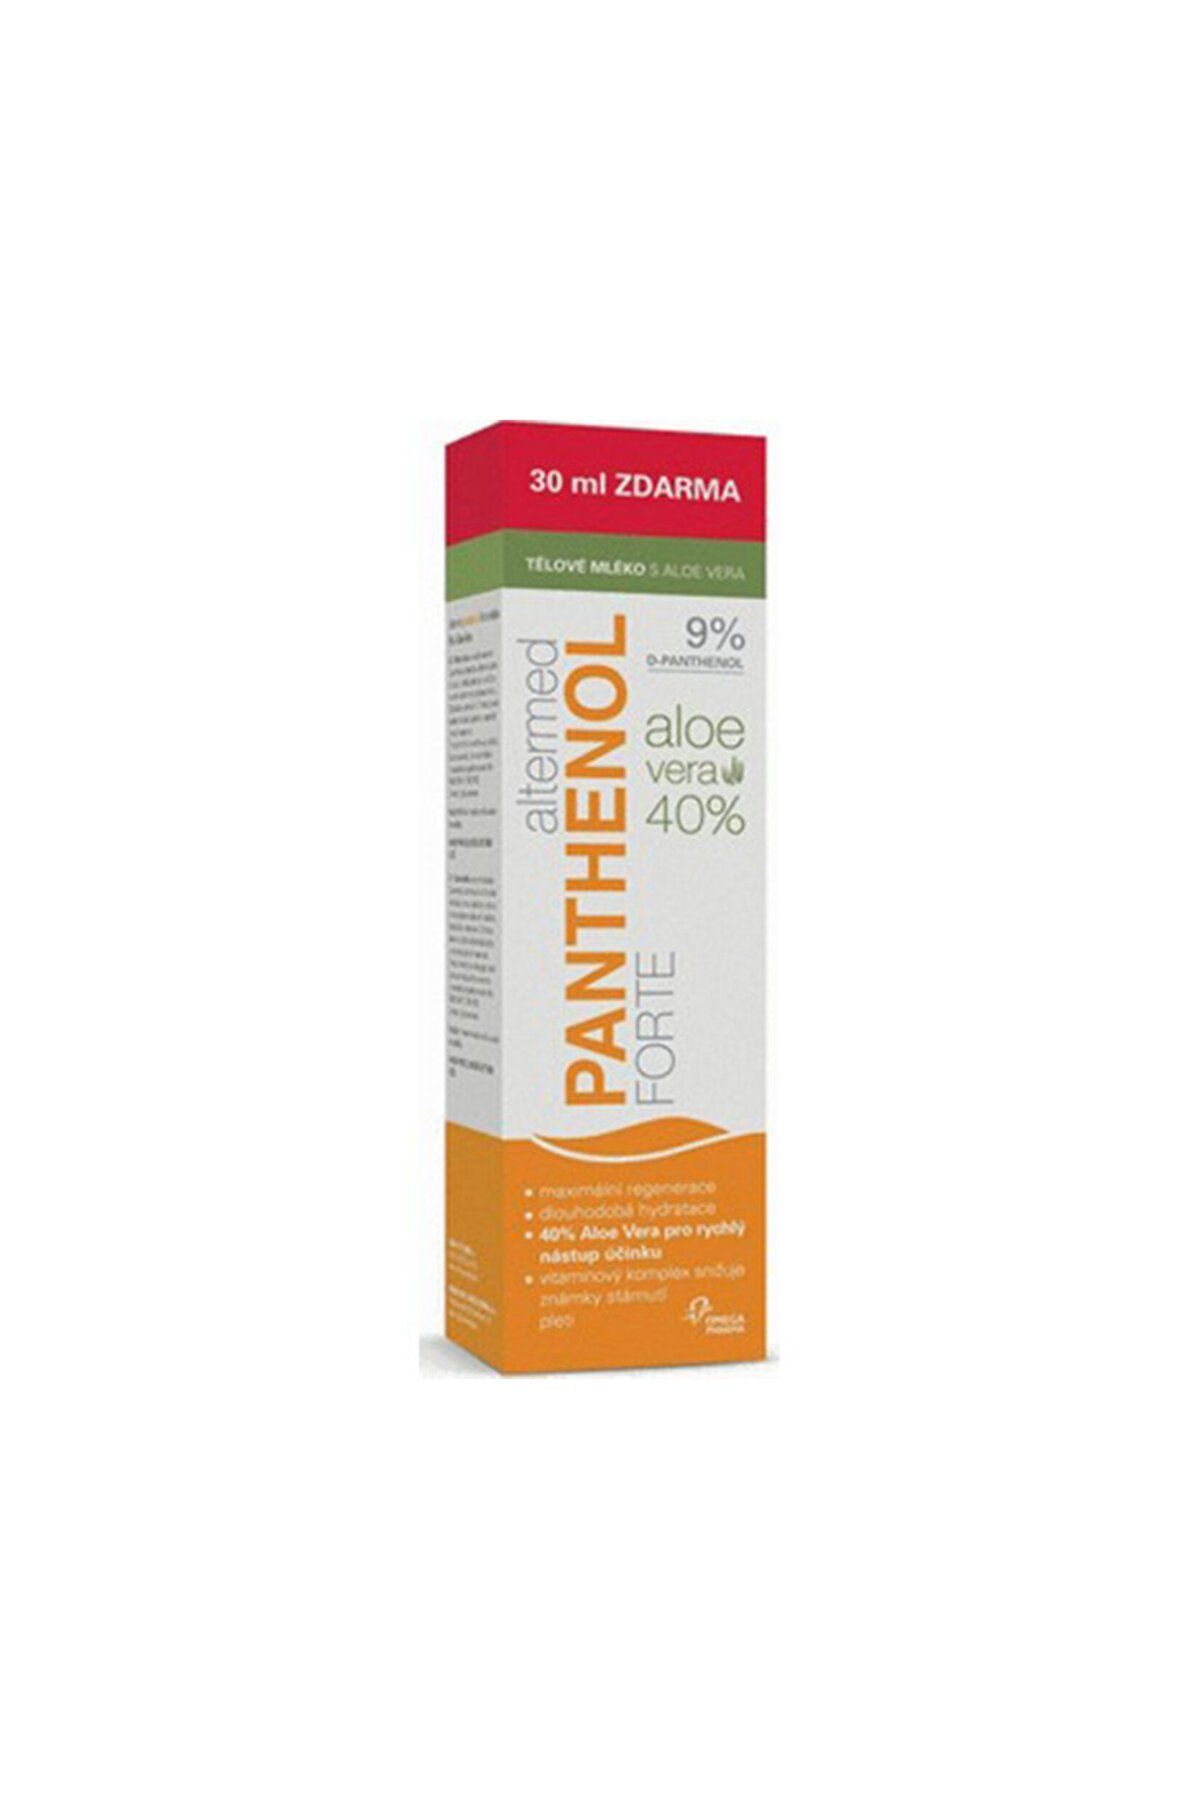 Altermed Panthenol Forte Body Milk %9 Aleovera 230ml